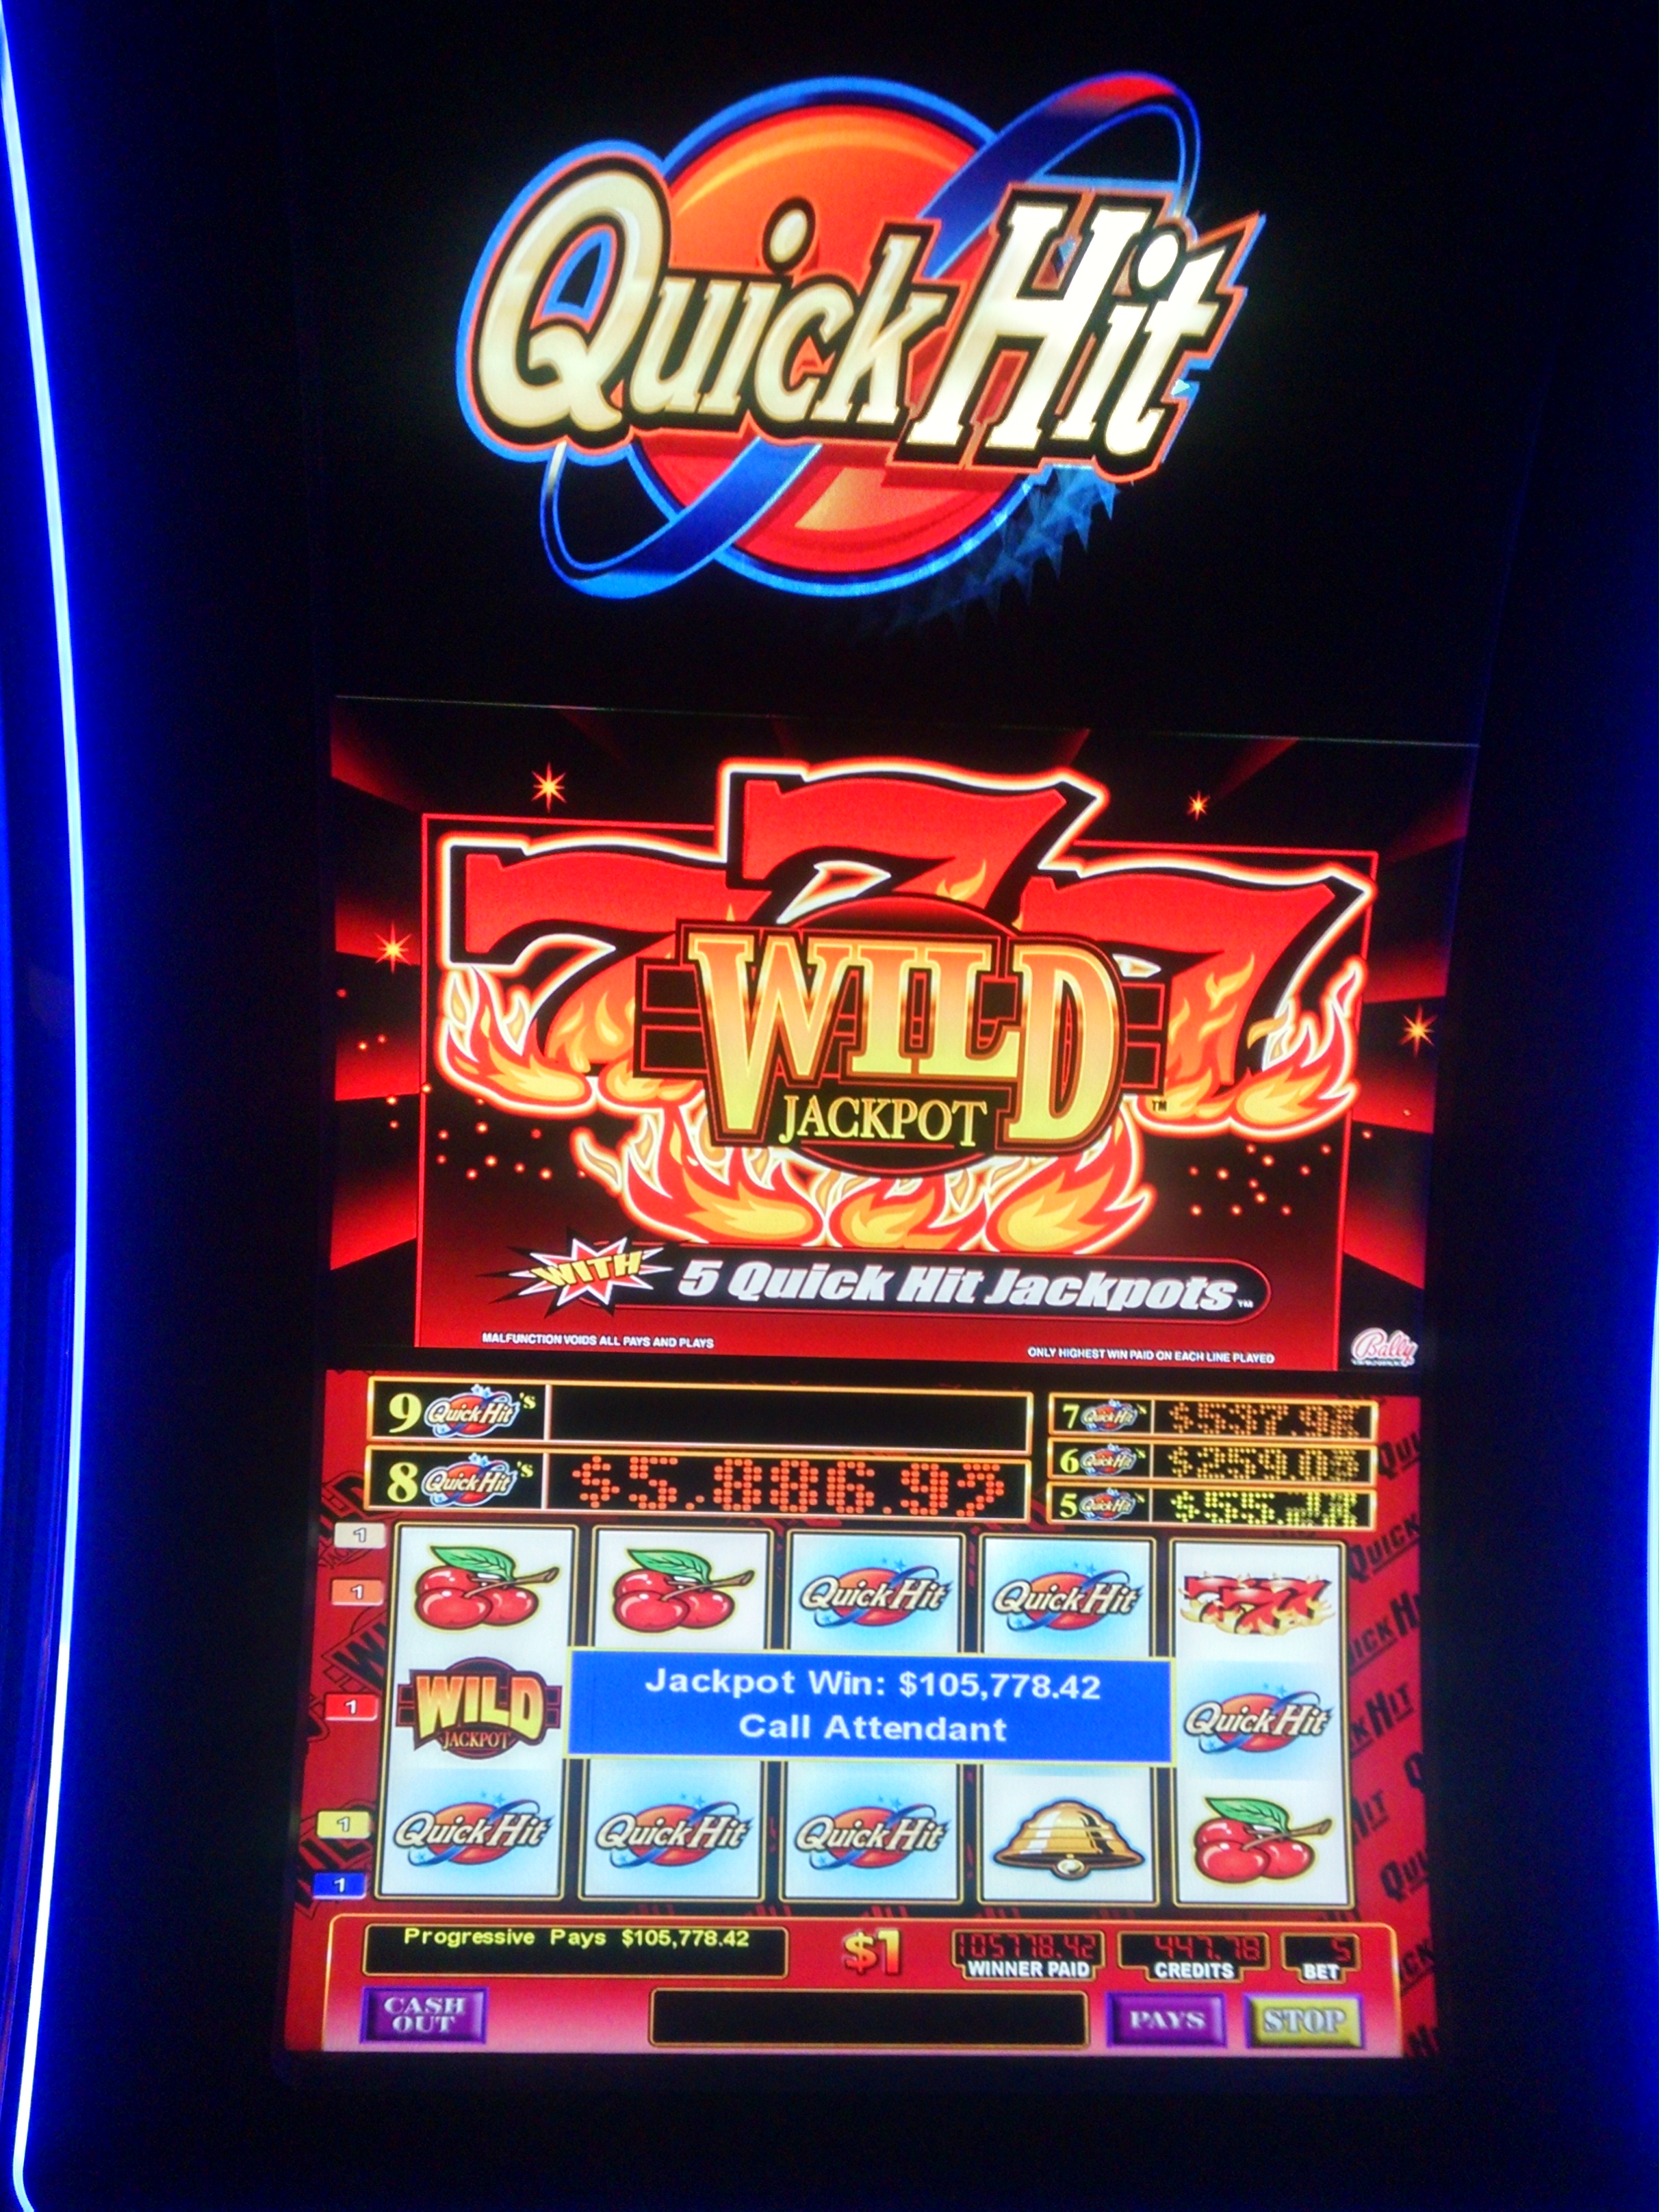 Platinum quick hits slot machine wins